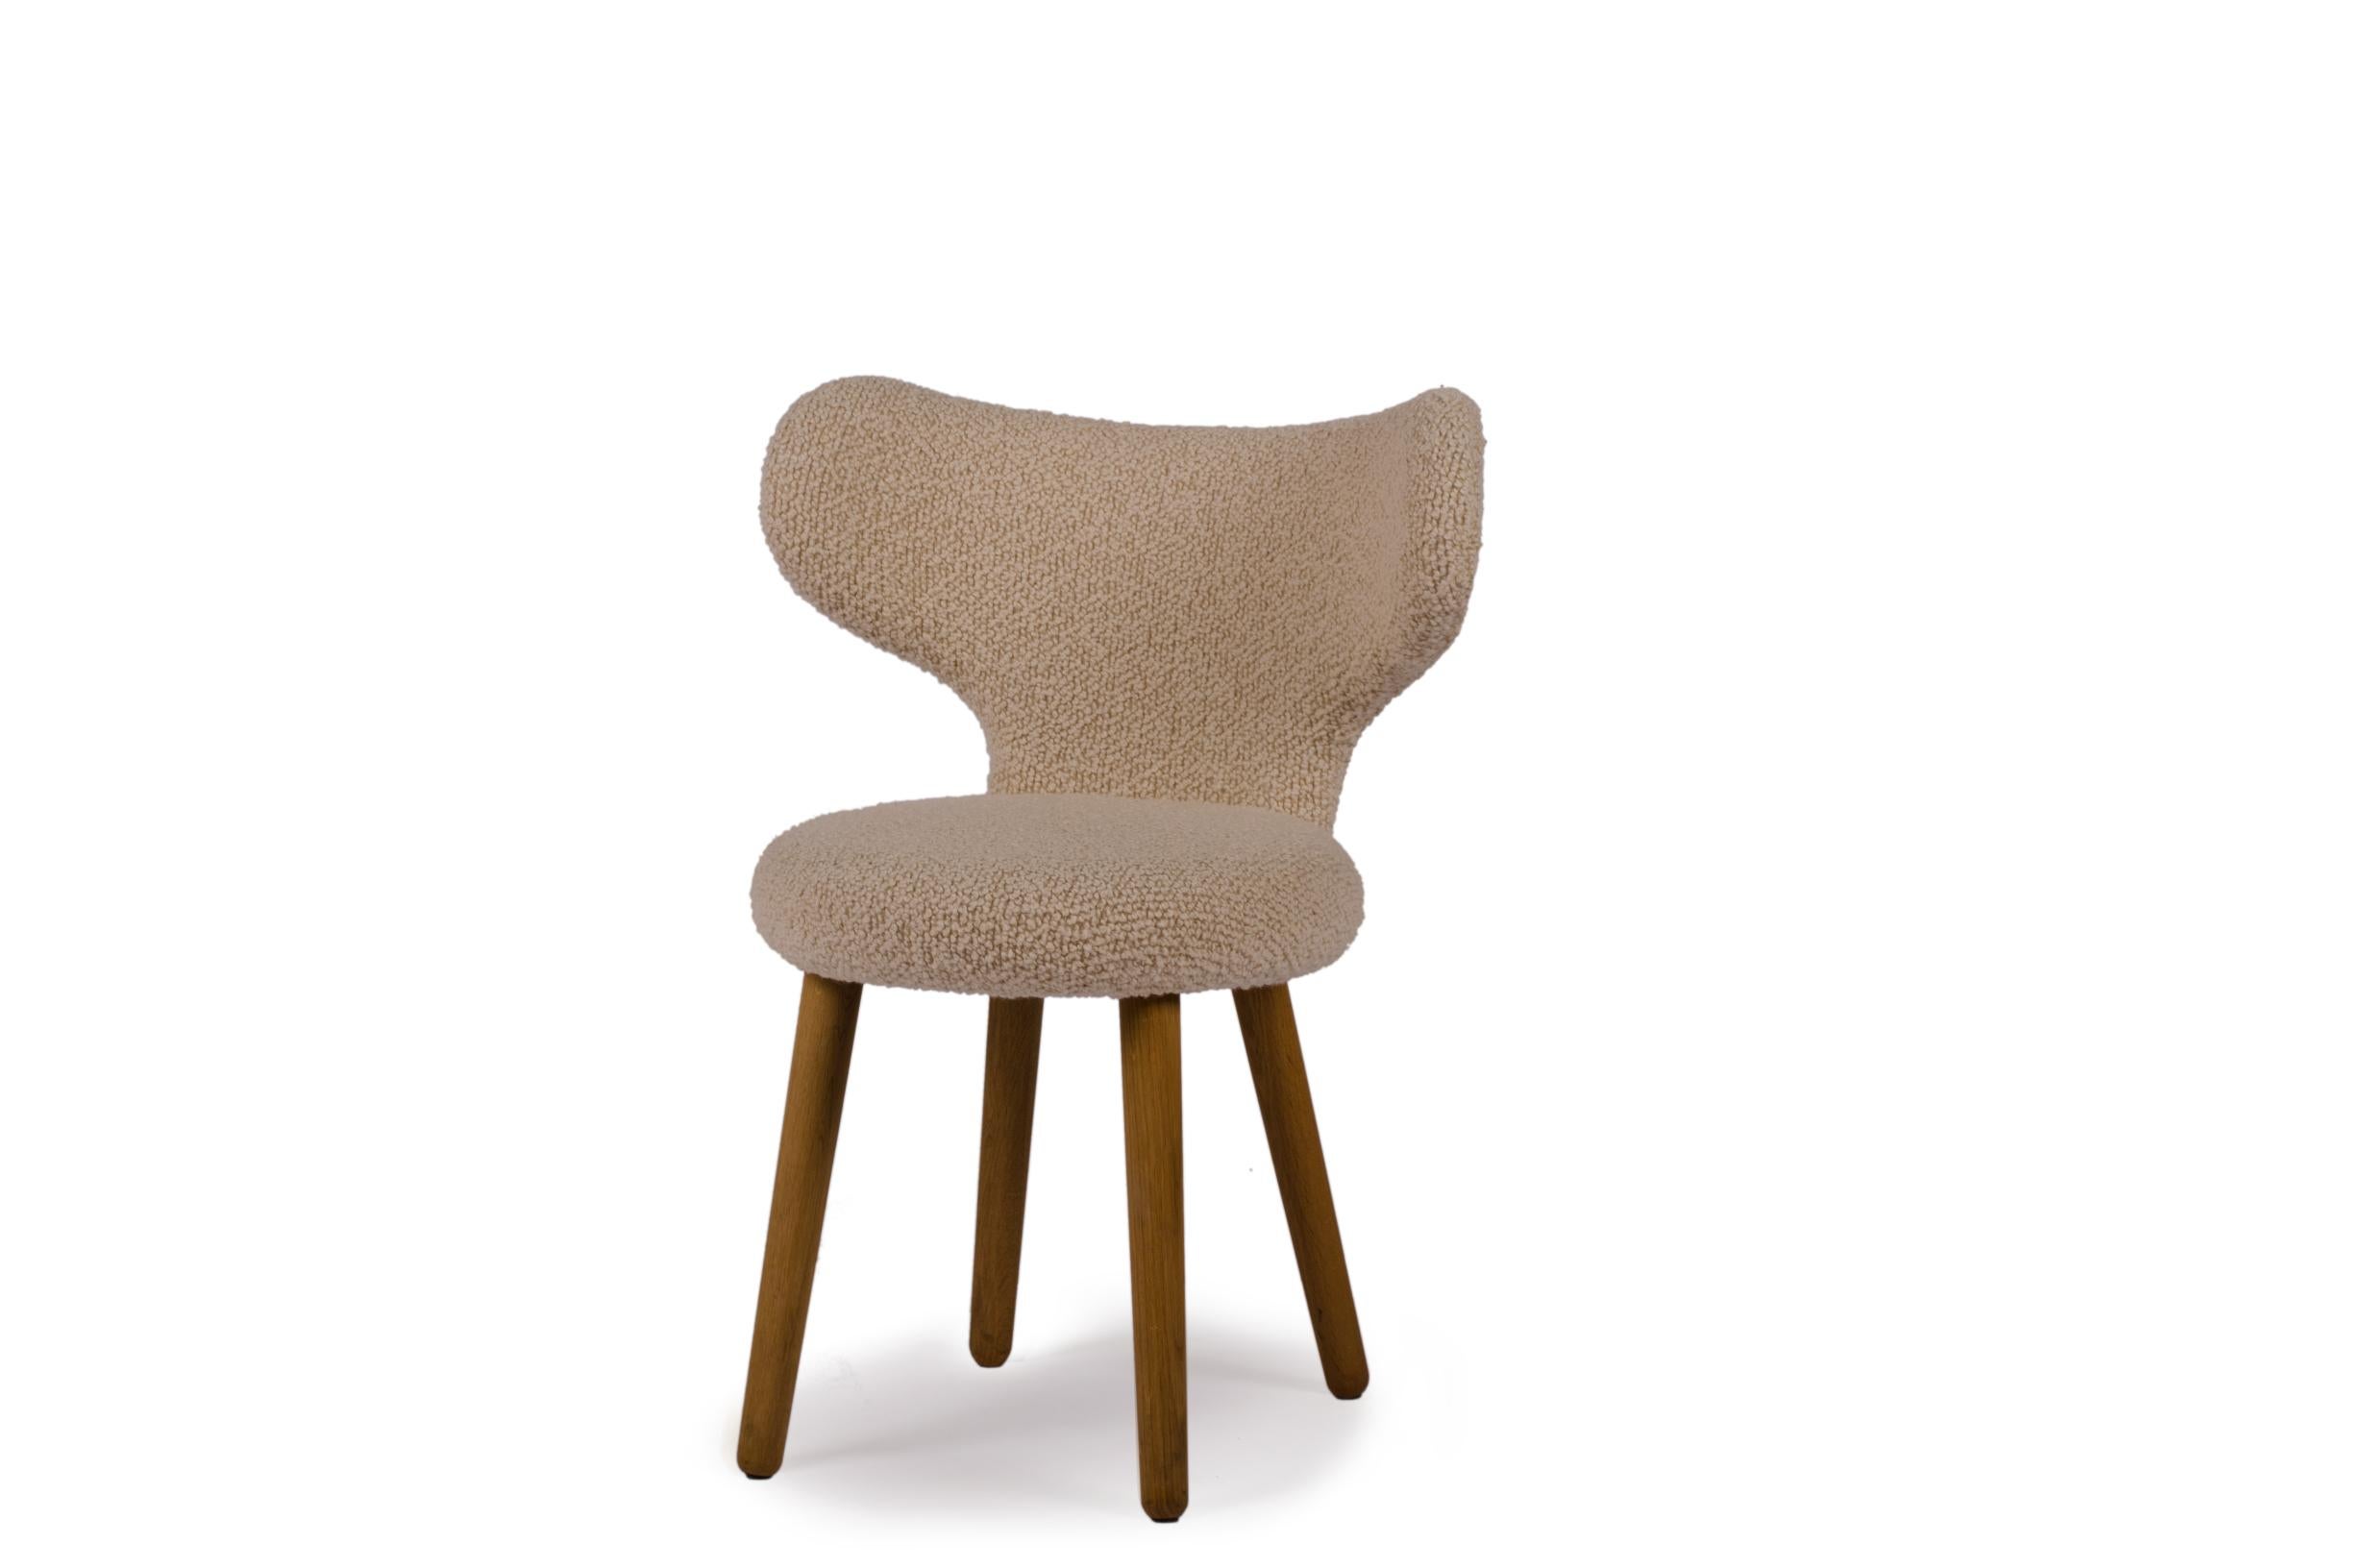 BUTE/Storr TMBO lounge chair by Mazo Design
Dimensions: W 90 x D 68.5 x H 87 cm
Materials: Oak, textile
Also available: ROMO/Linara, DAW/Royal, KVADRAT/Remix, KVADRAT/Hallingdal & Fiord, DEDAR/Linear,
DAW/Mohair & Mcnutt, Sheepskin

1935 is